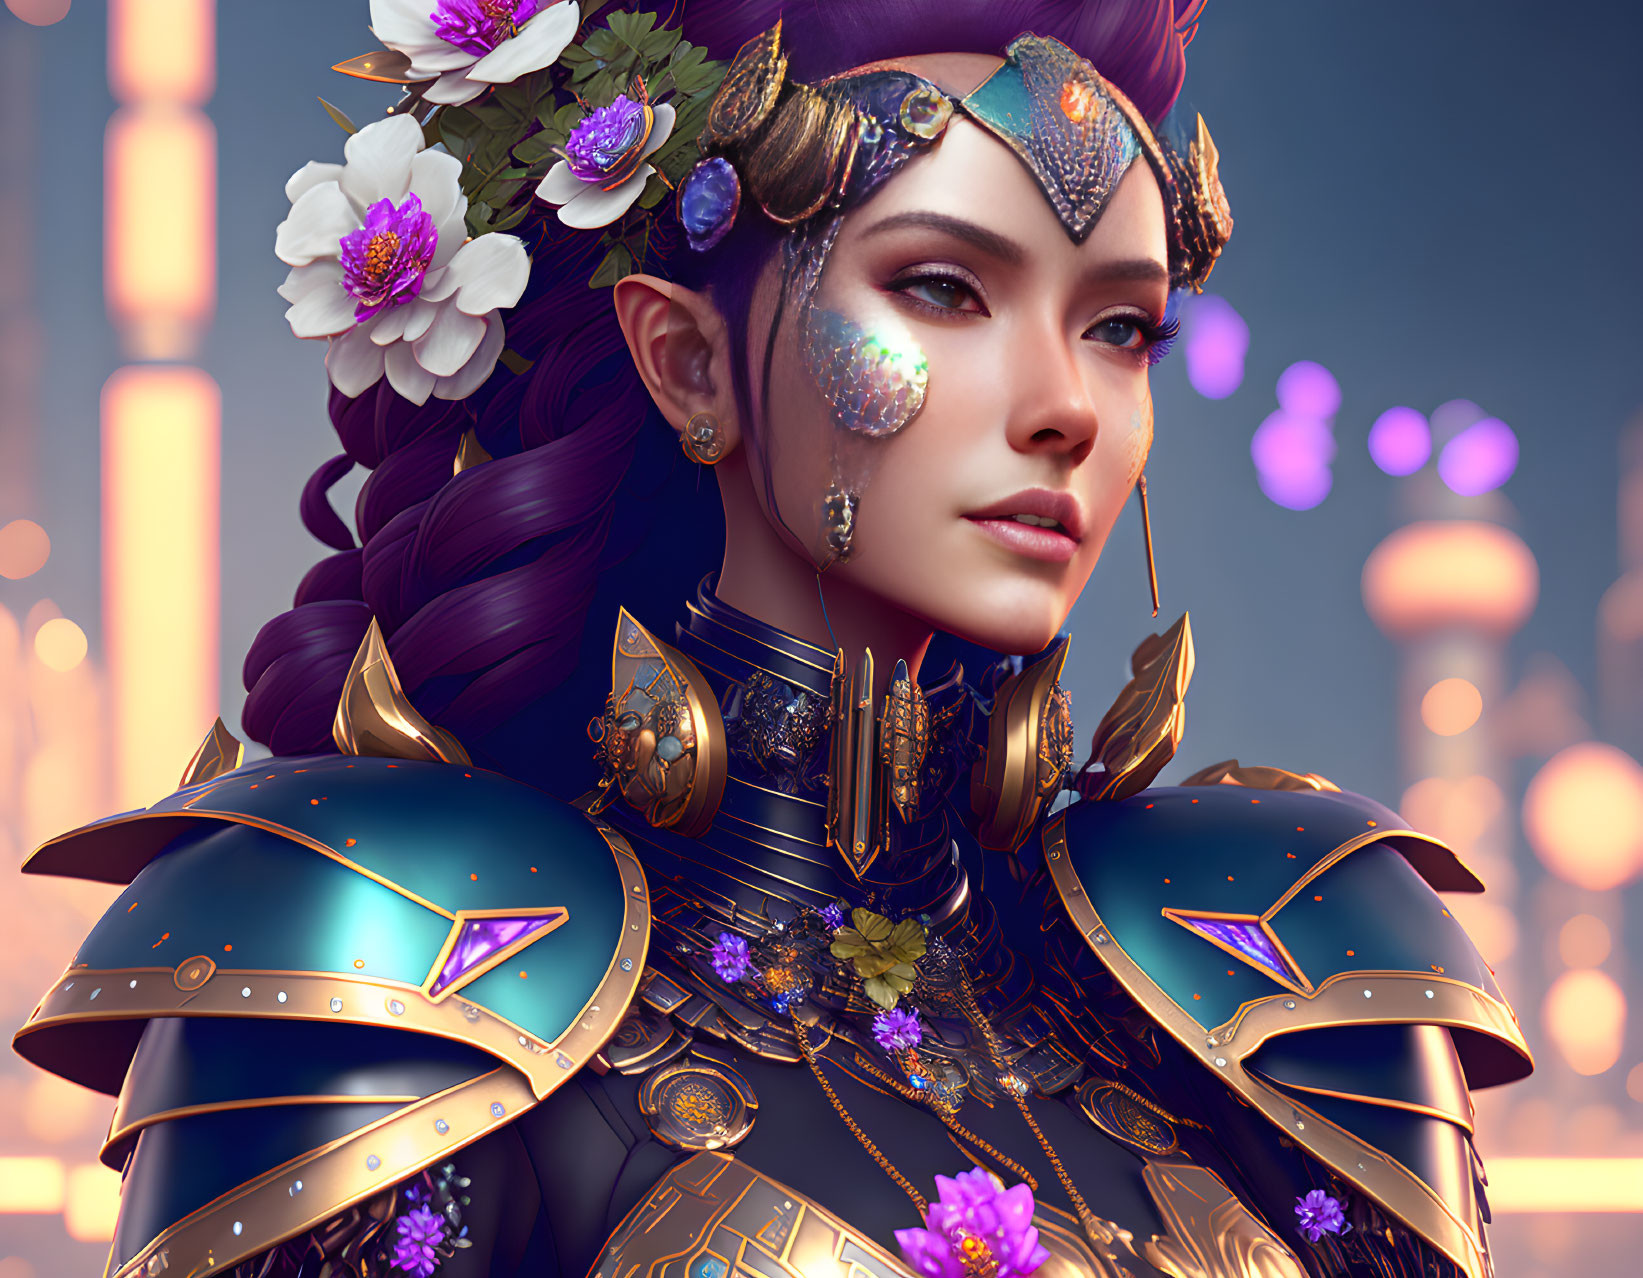 Digital portrait of woman in fantasy armor with elf-like ears & purple gemstones